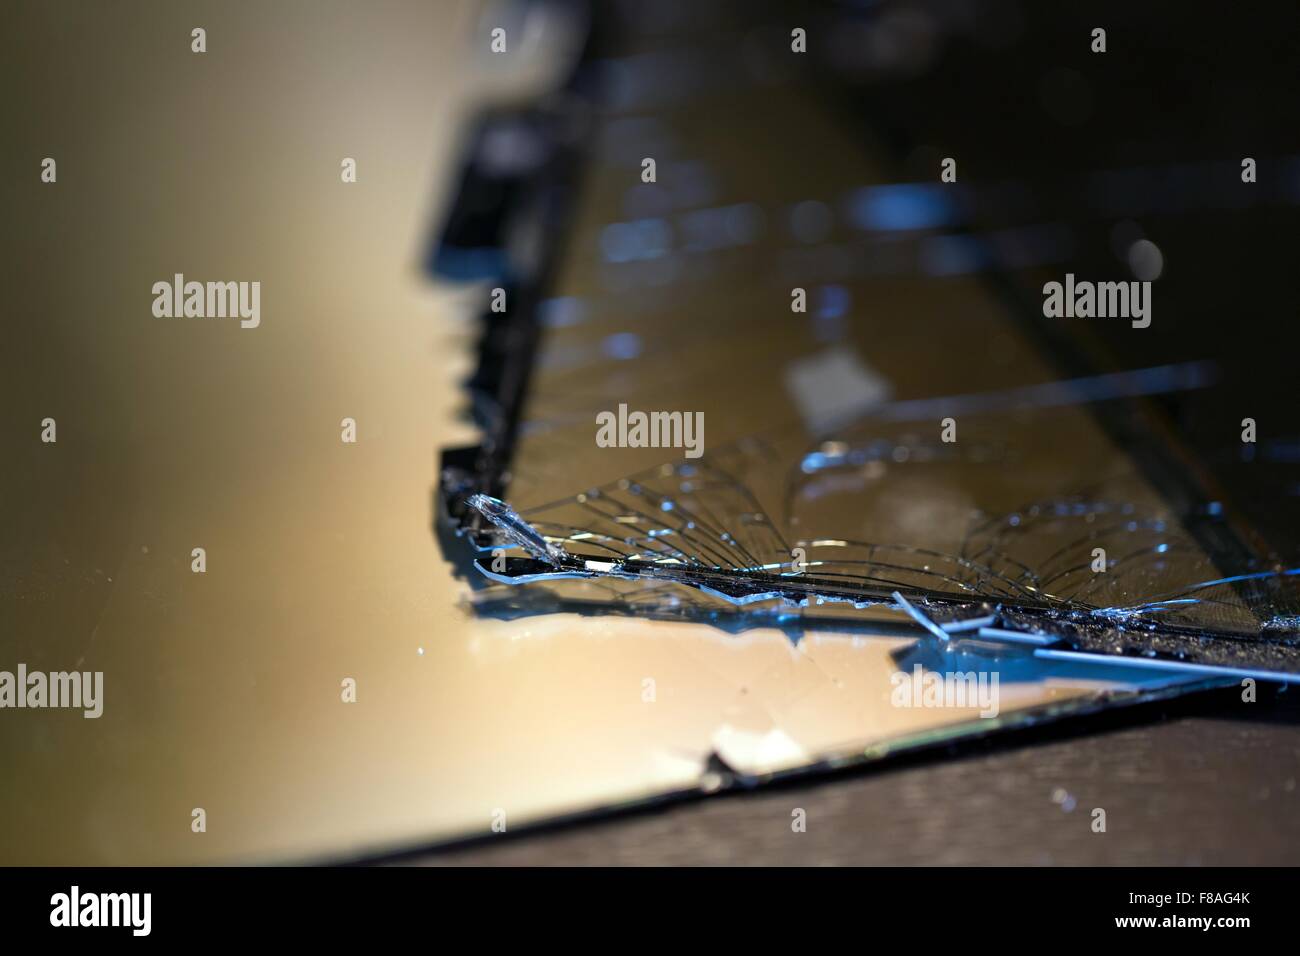 Tablet broken LCD screen Stock Photo